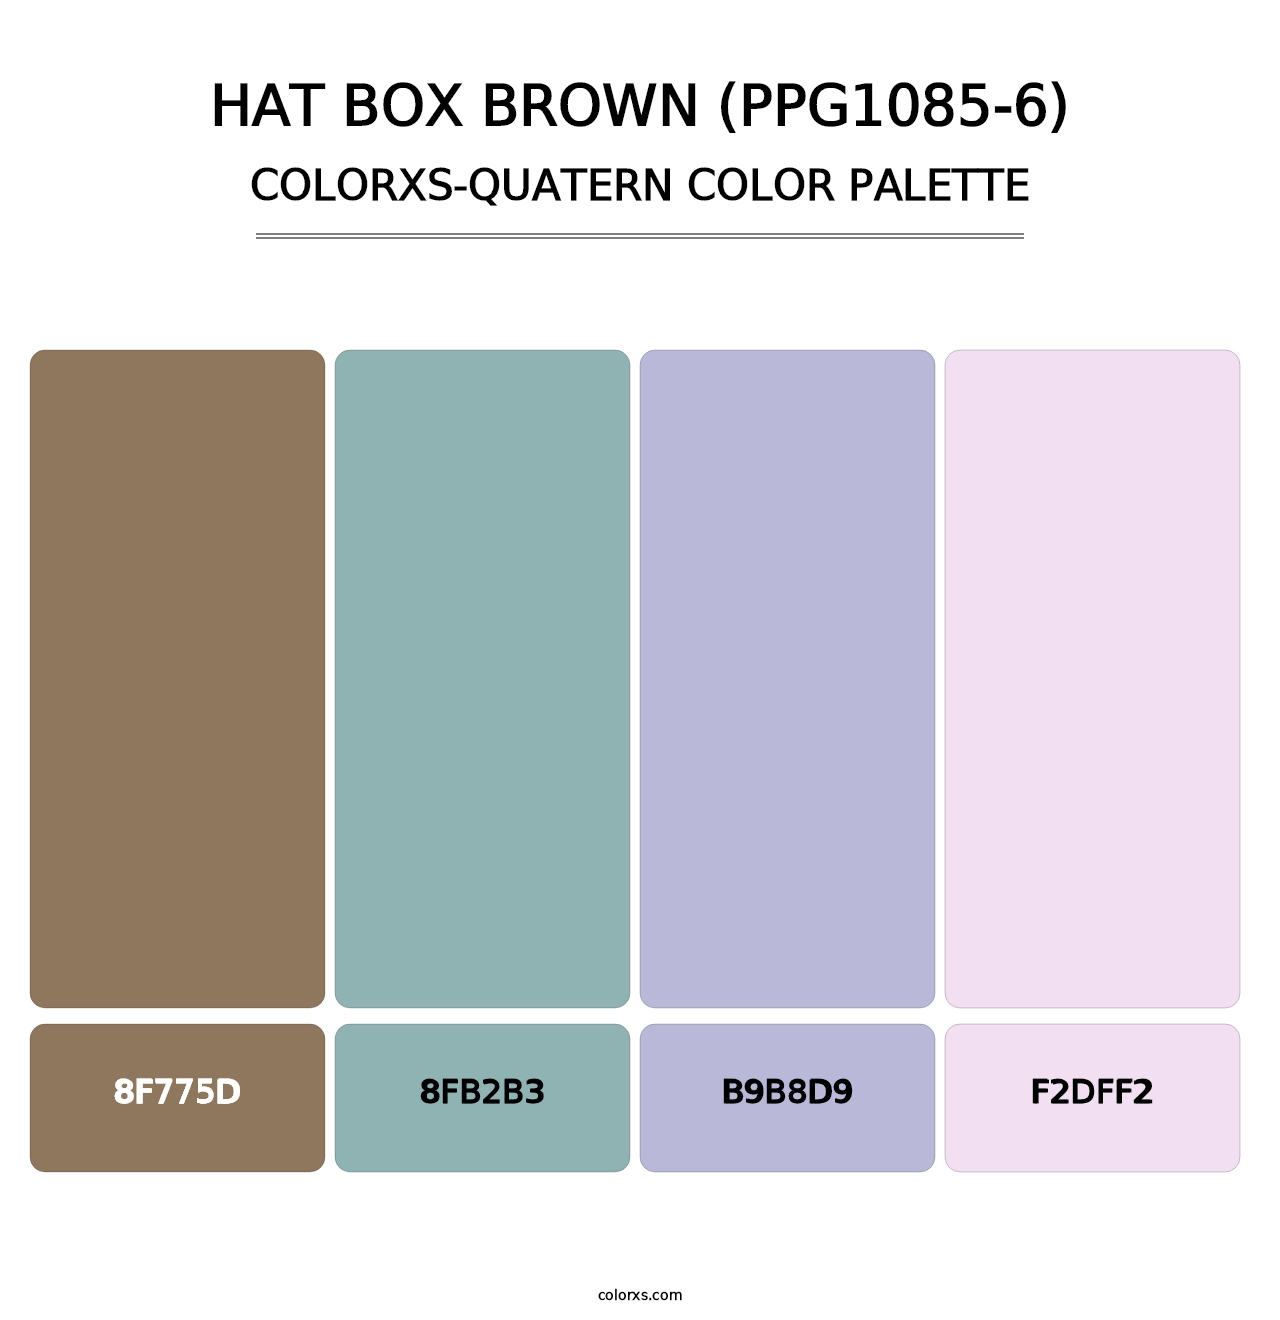 Hat Box Brown (PPG1085-6) - Colorxs Quatern Palette